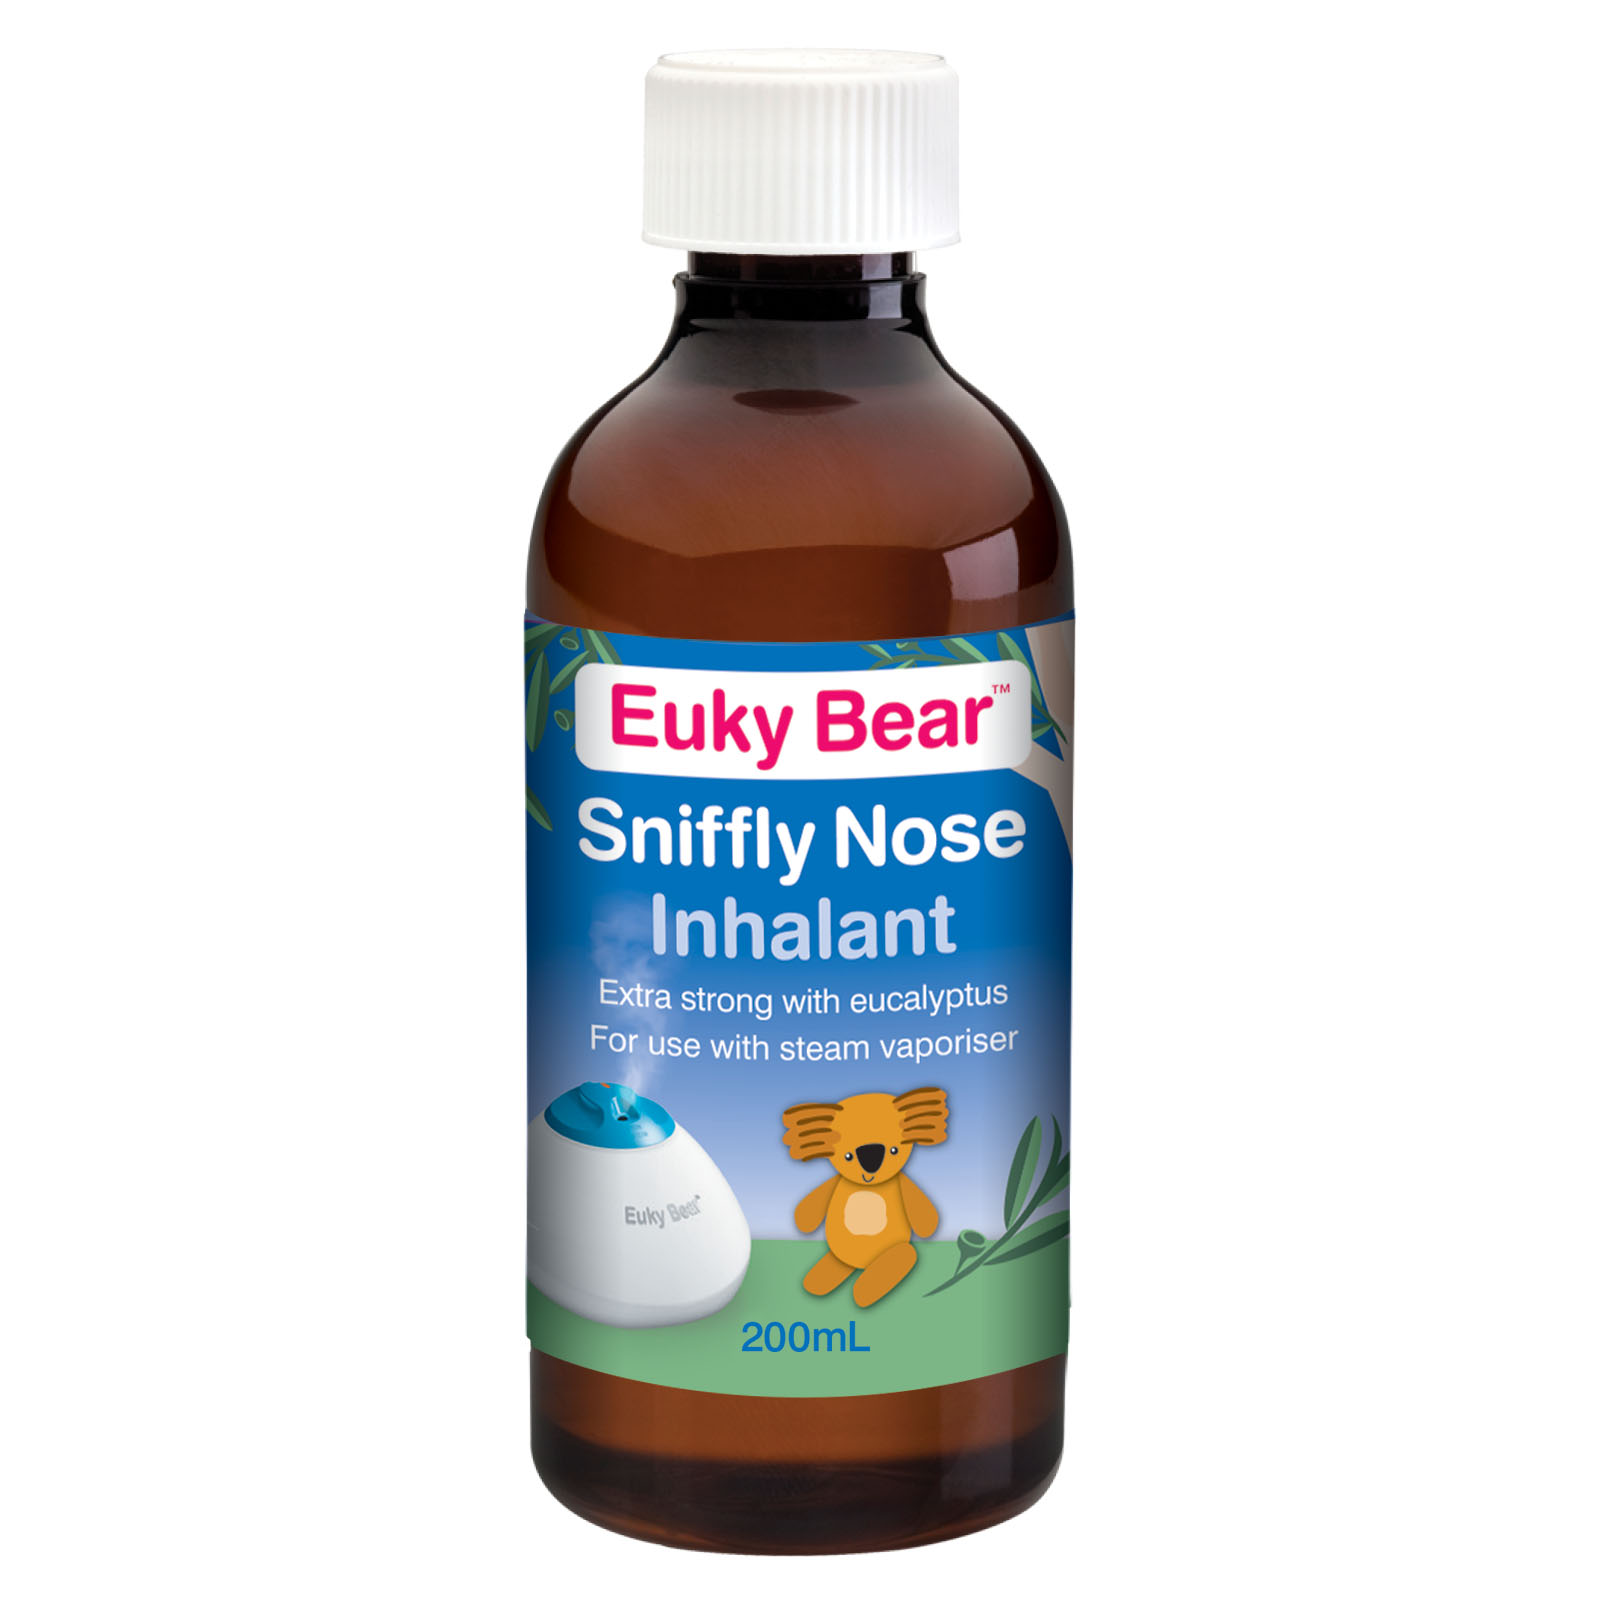 Euky Bear Sniffly Nose Inhalant (200ml)